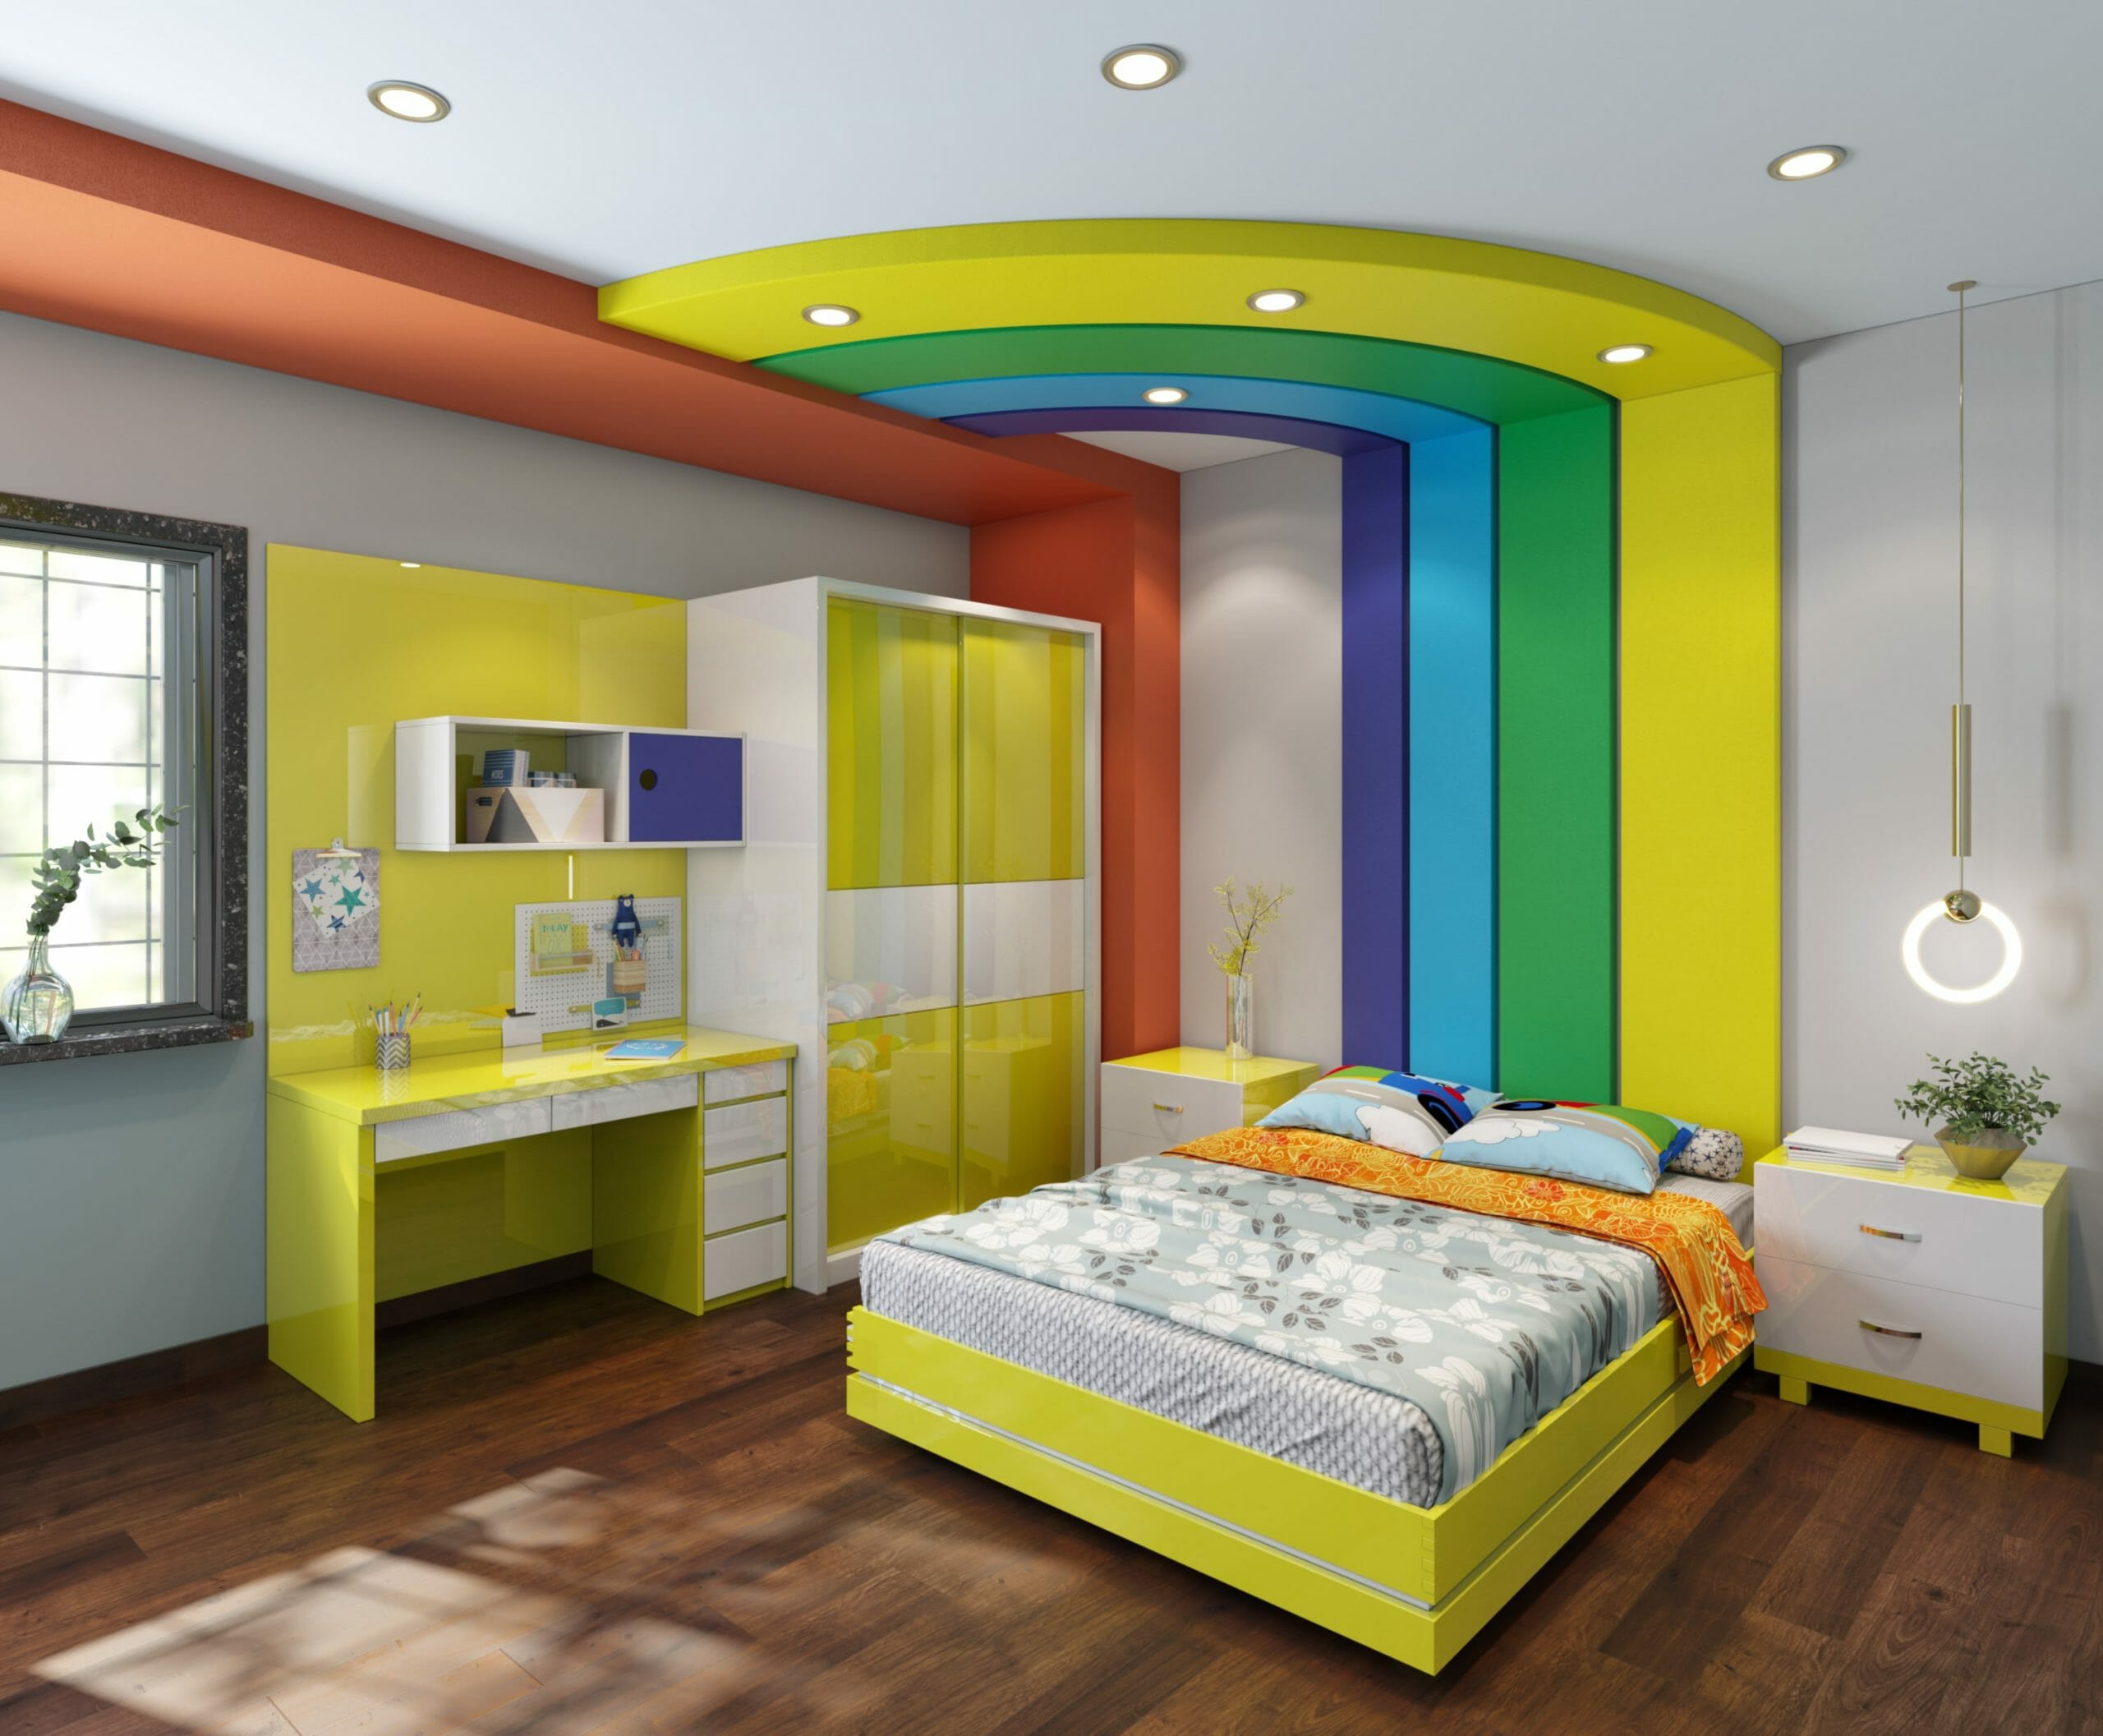 Interior design for child room